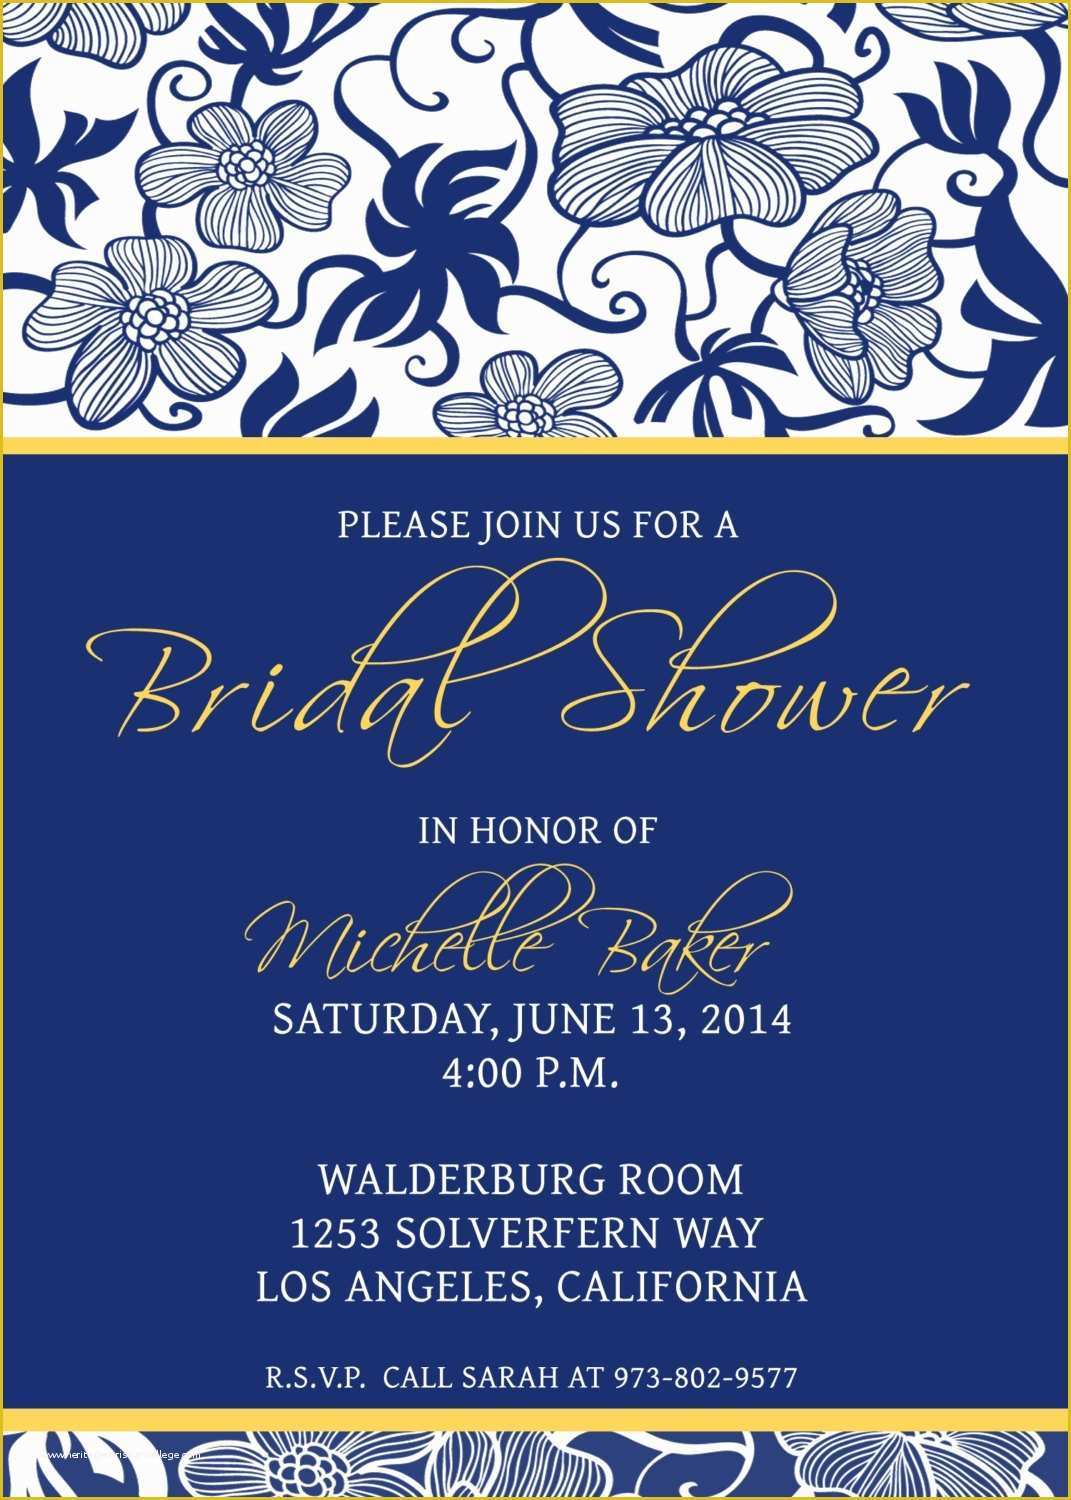 free-bridal-shower-invitation-templates-photoshop-of-floral-bridal-shower-invitation-card-design